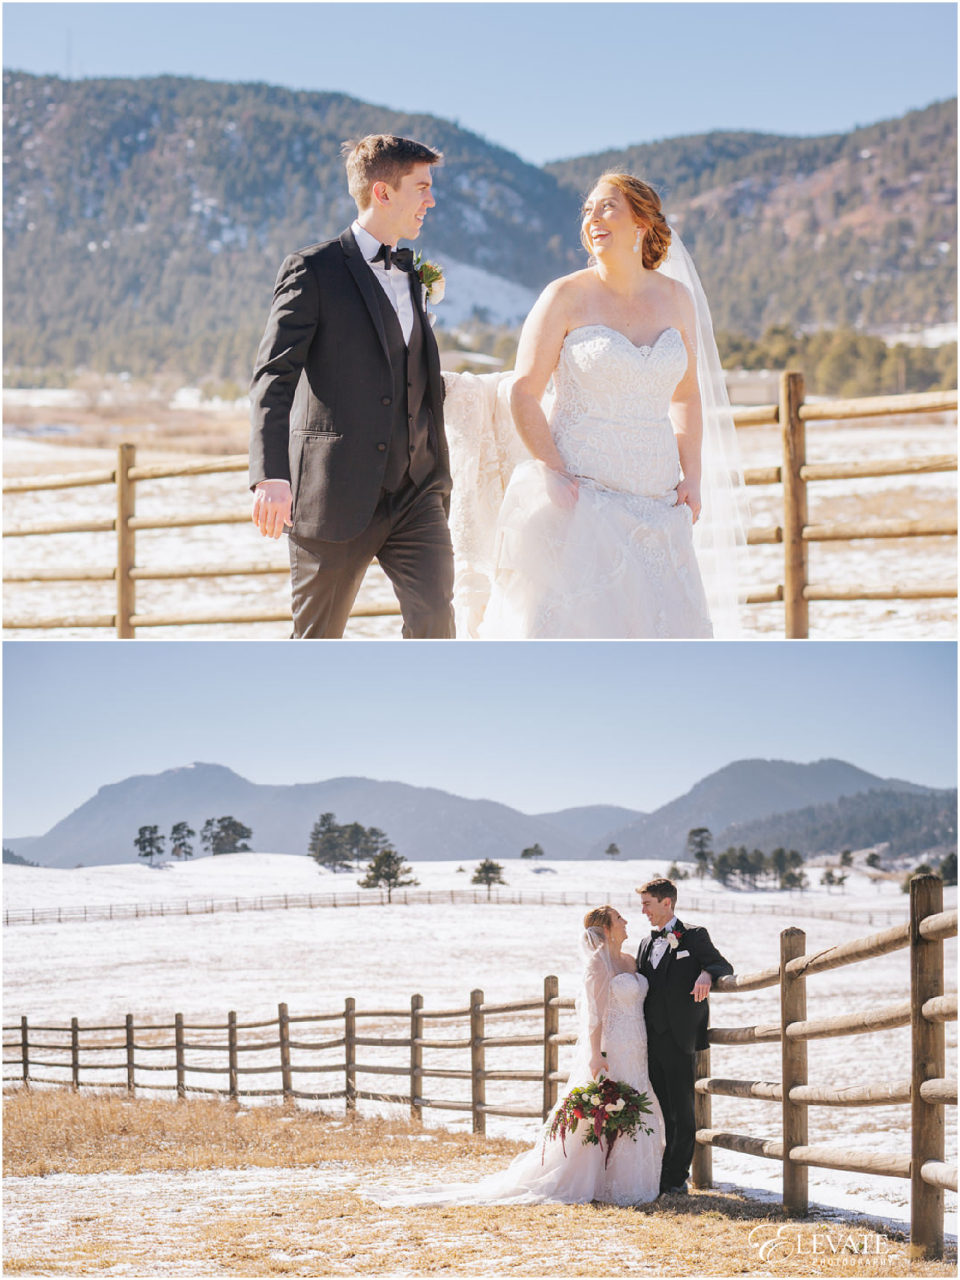 spruce mountain ranch winter wedding